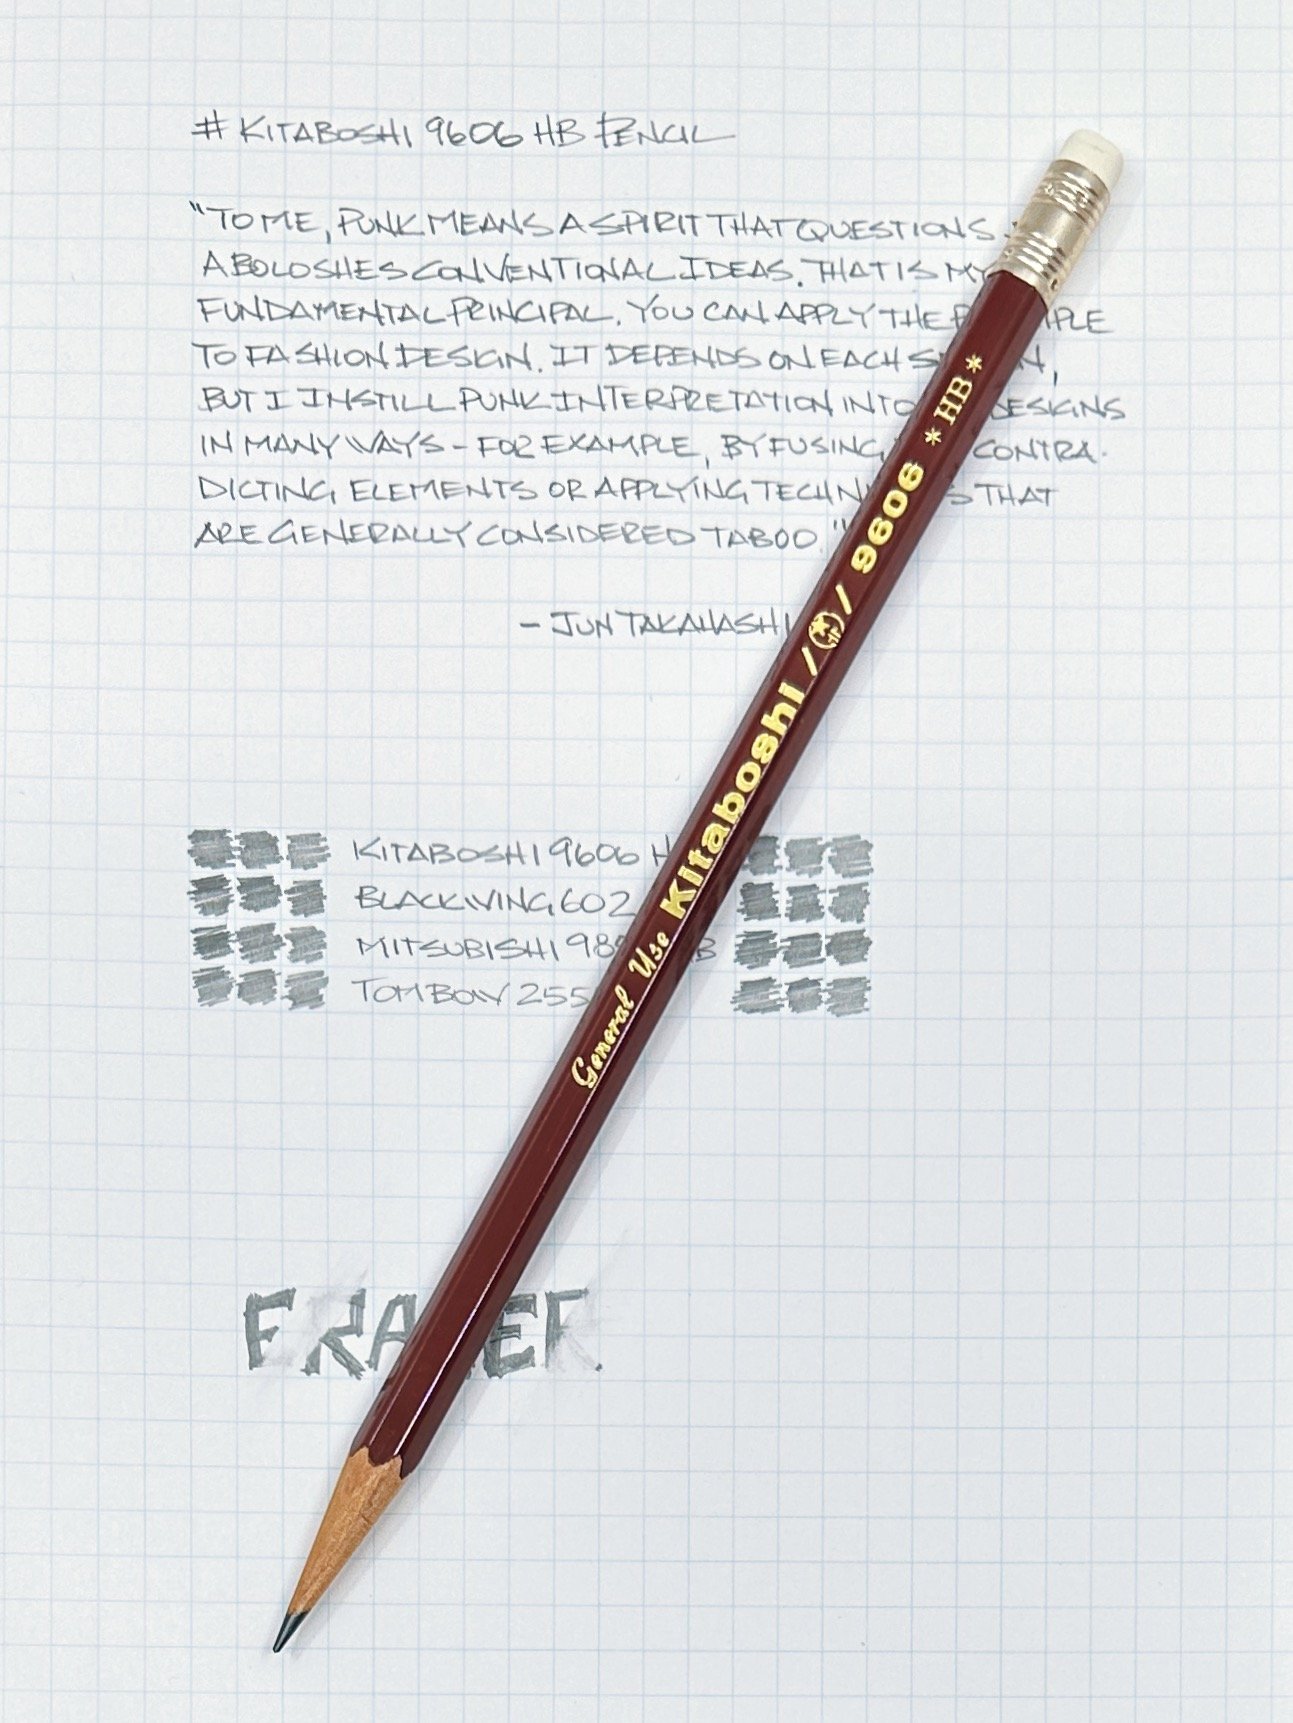 Kitaboshi 9606 HB Pencil Review — The Pen Addict